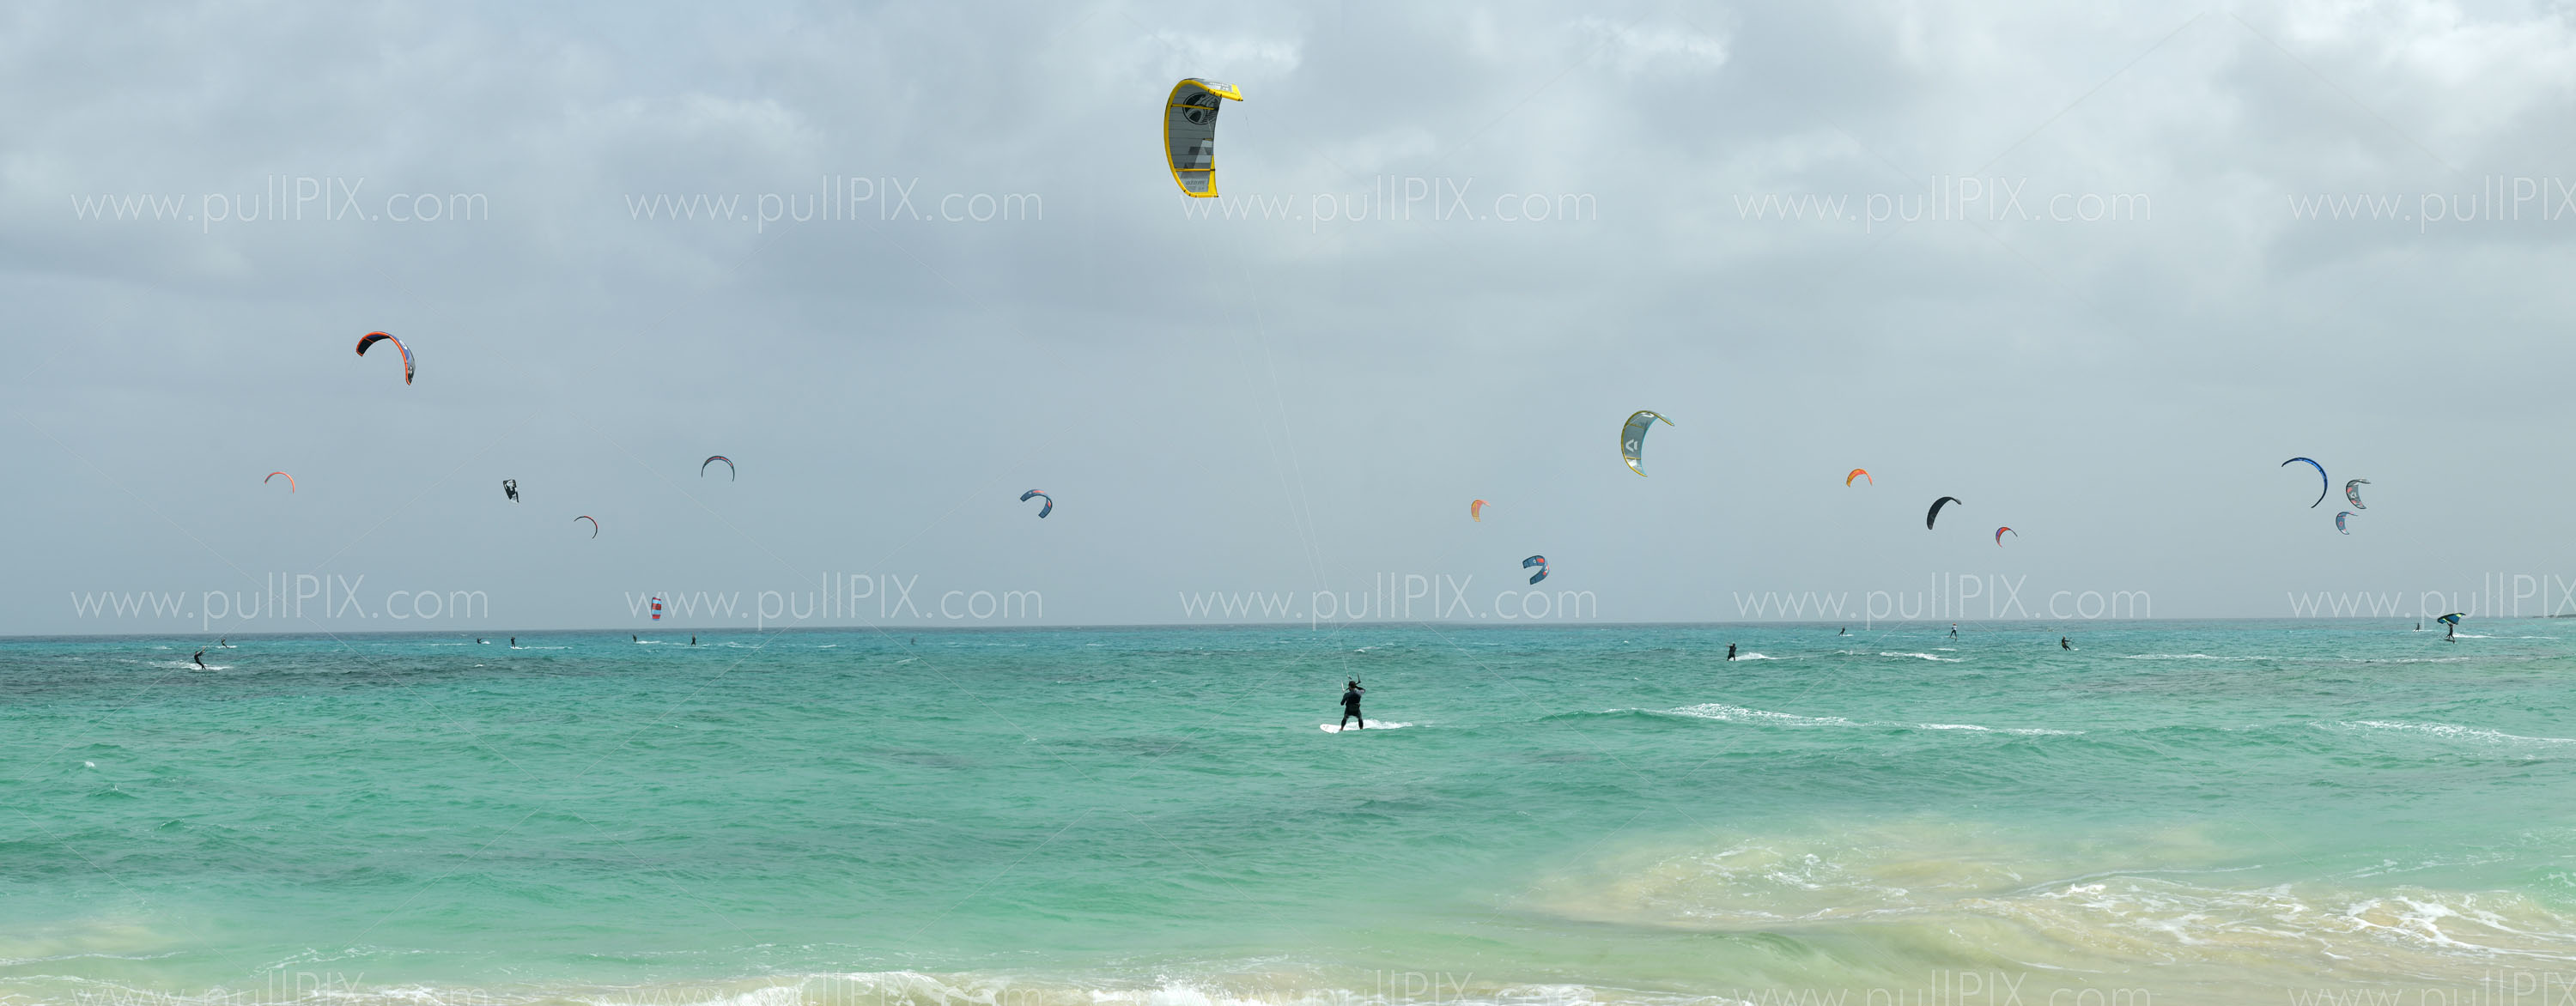 Preview kite surfers.jpg